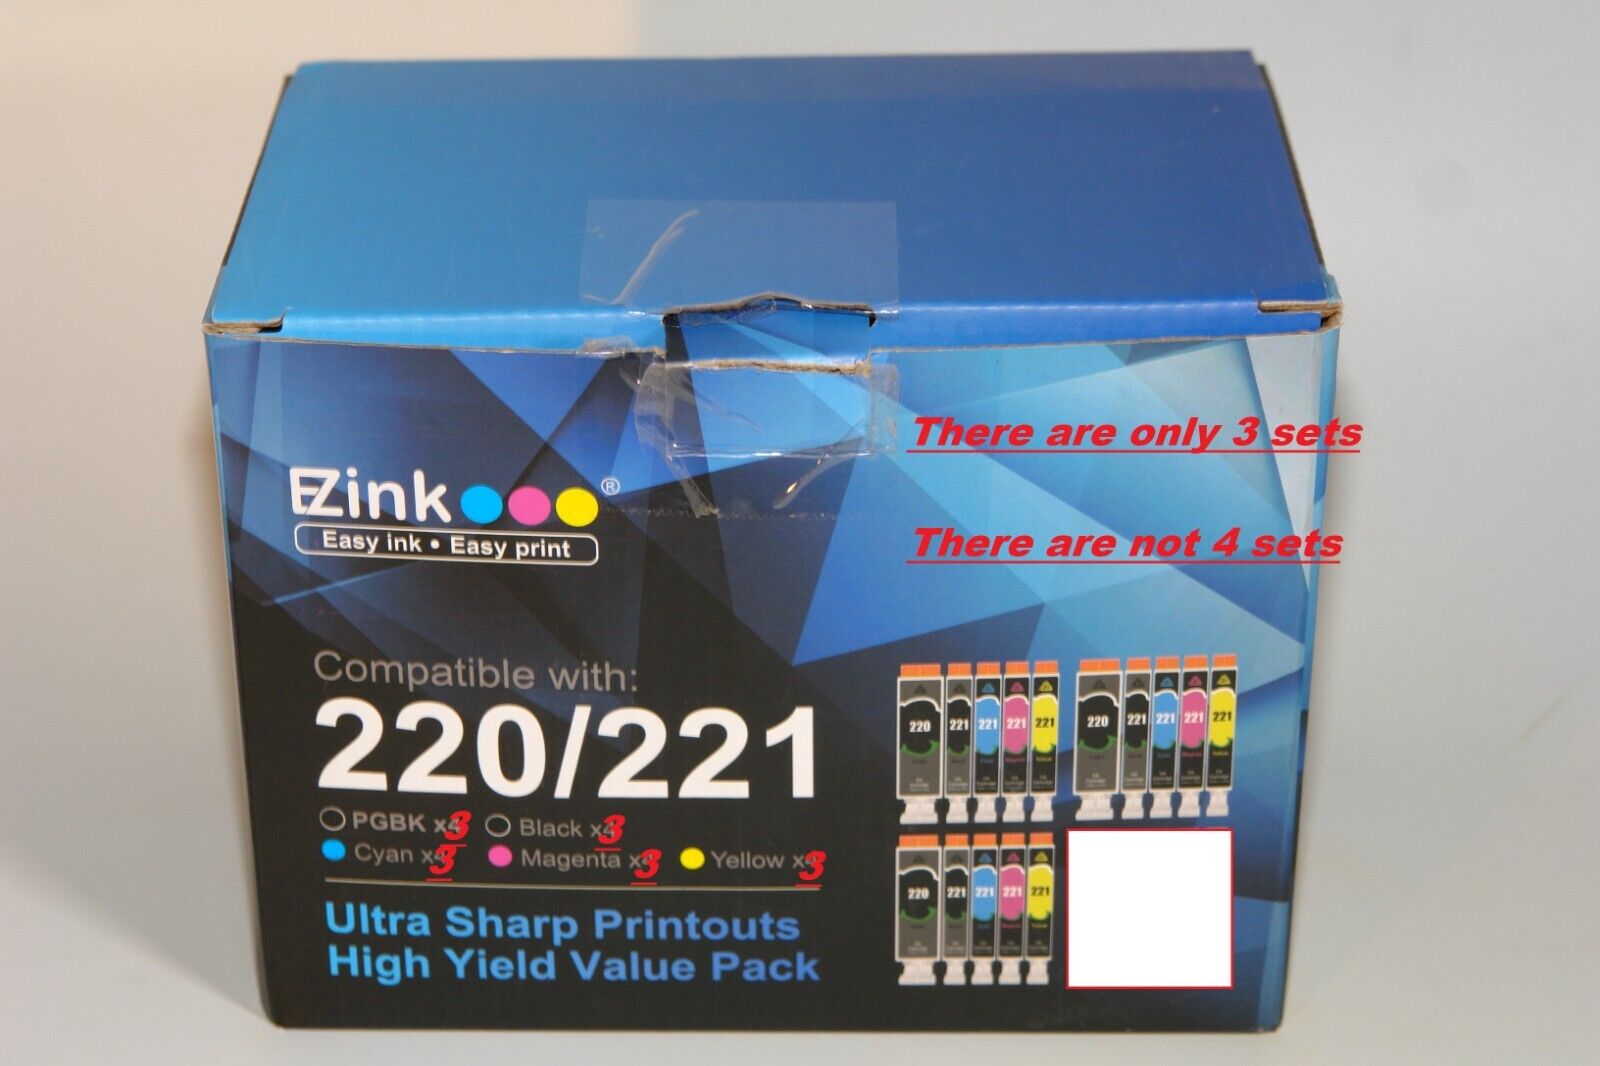 EZink 220/221 color and black box ink cartridges, Used missing some cartridges